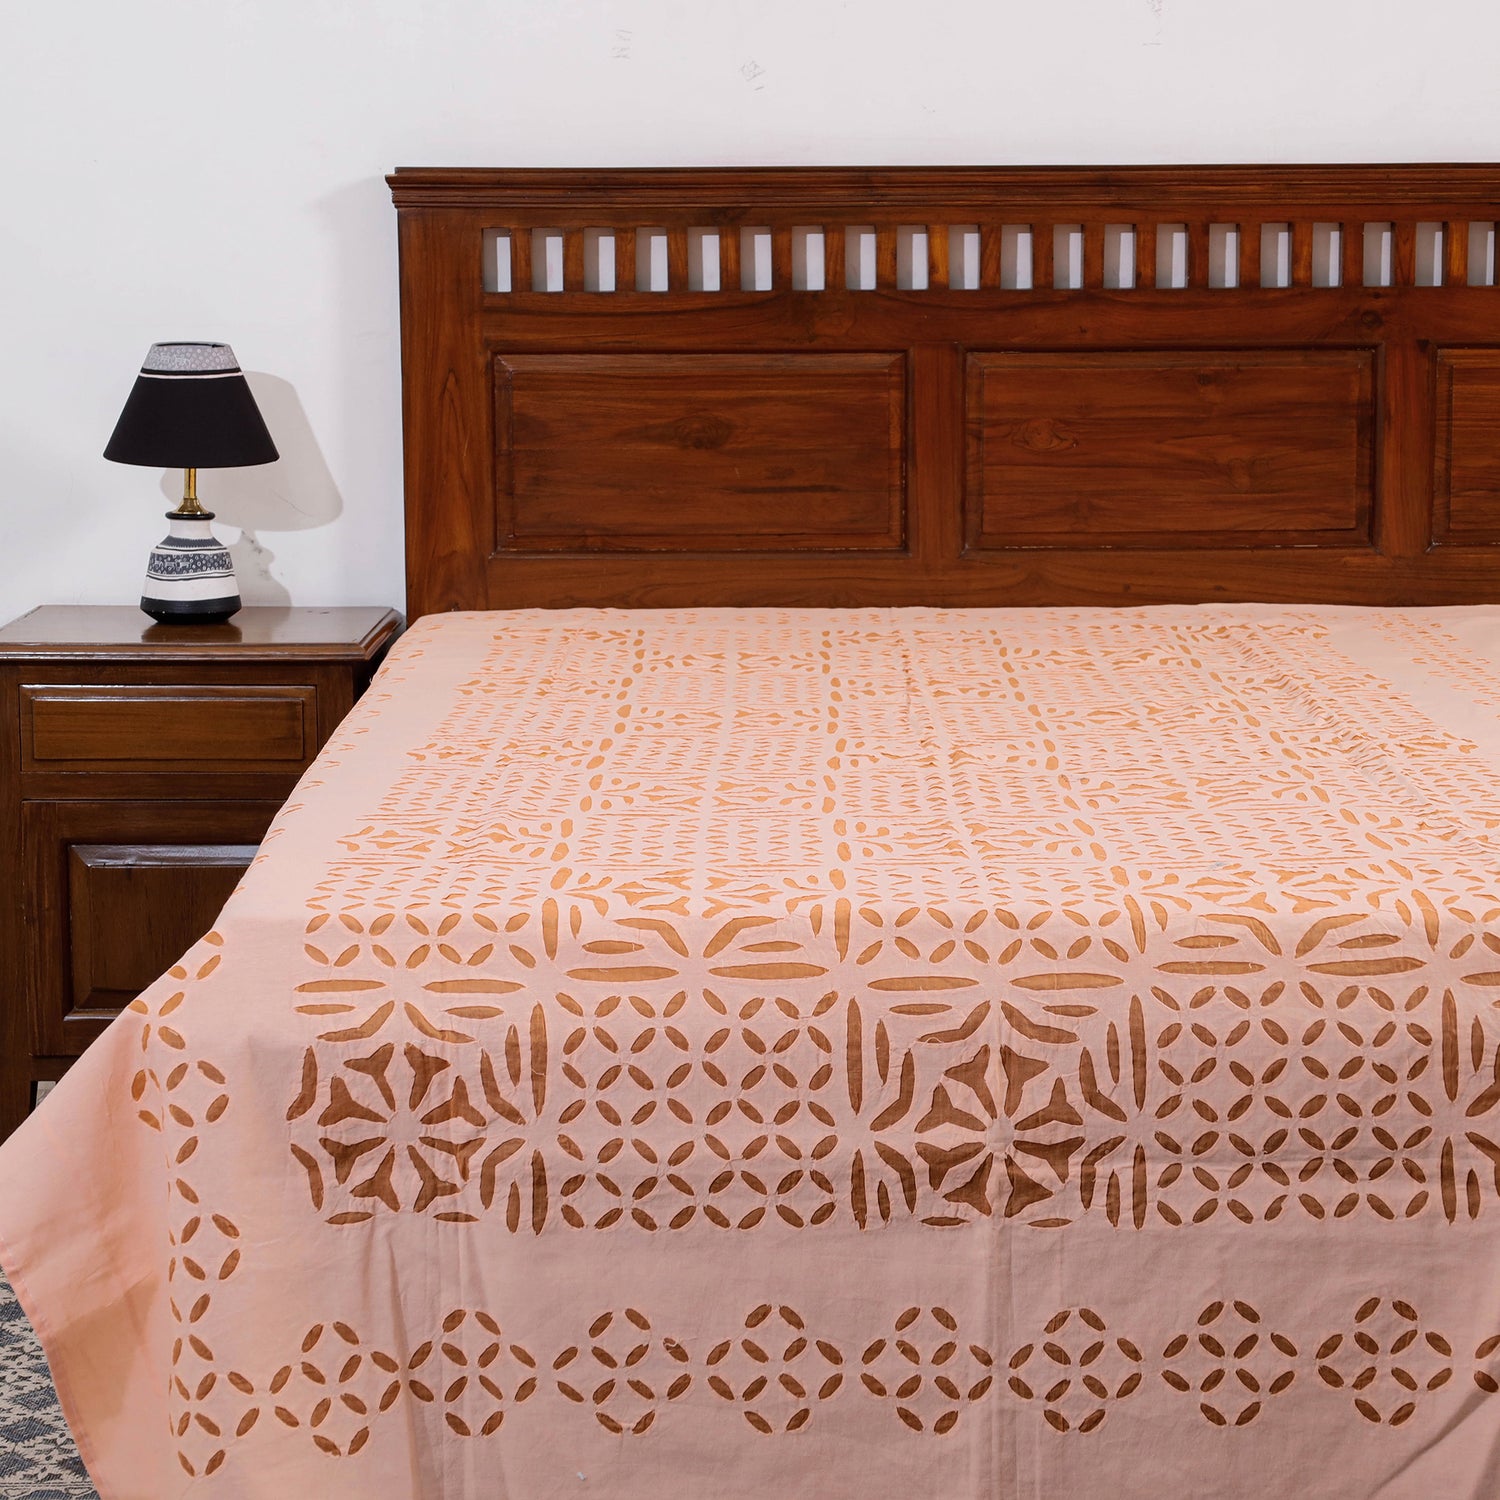 Barmer Applique Cutwork Cotton Single Bedcover (93 x 60 in)